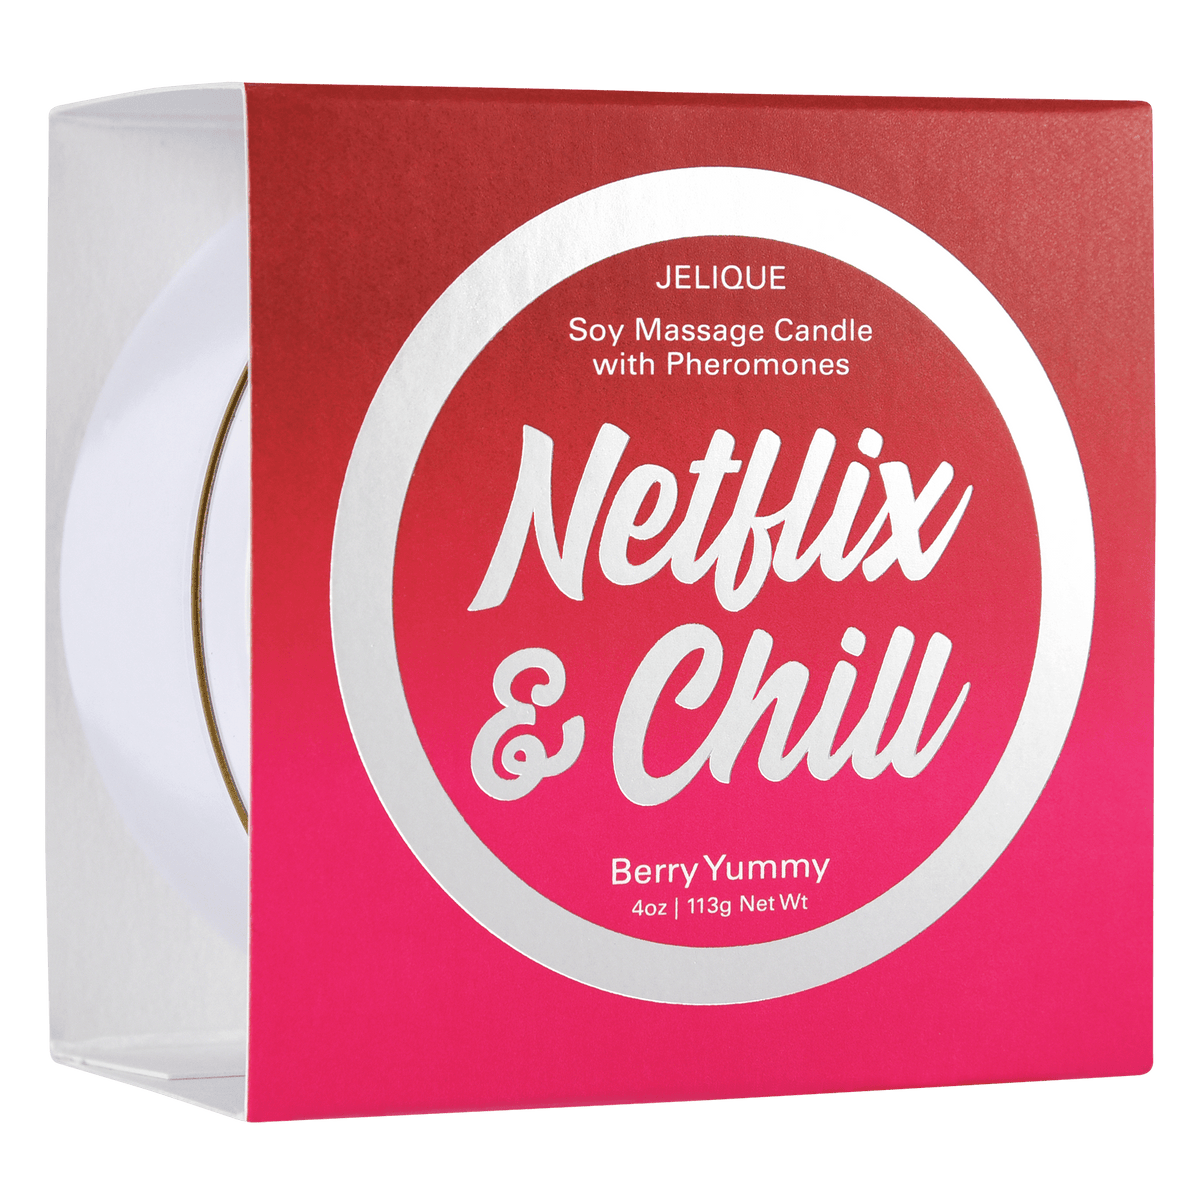 MOOD CANDLES Netflix & Chill - Pheromone Massage Candle Berry Yummy Lubes Jelique   